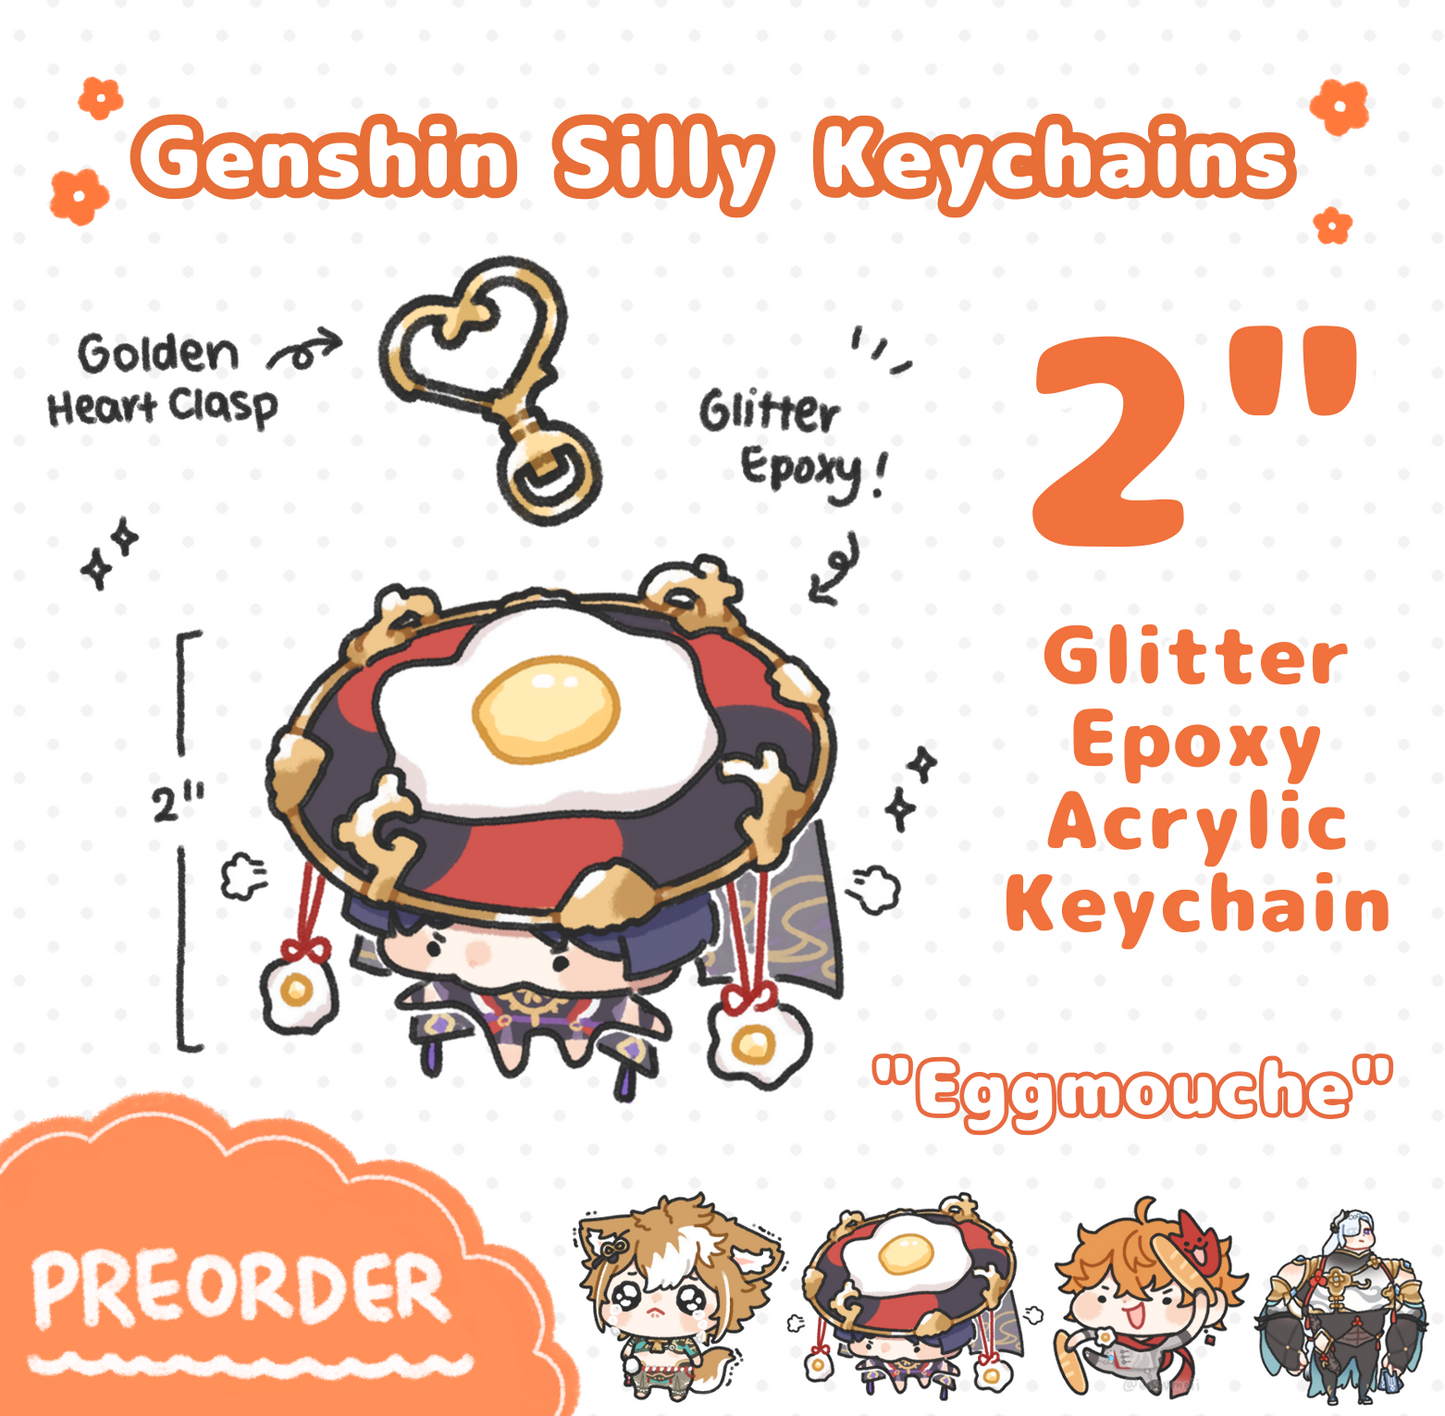 Genshin Silly Glitter Epoxy Acrylic Keychains